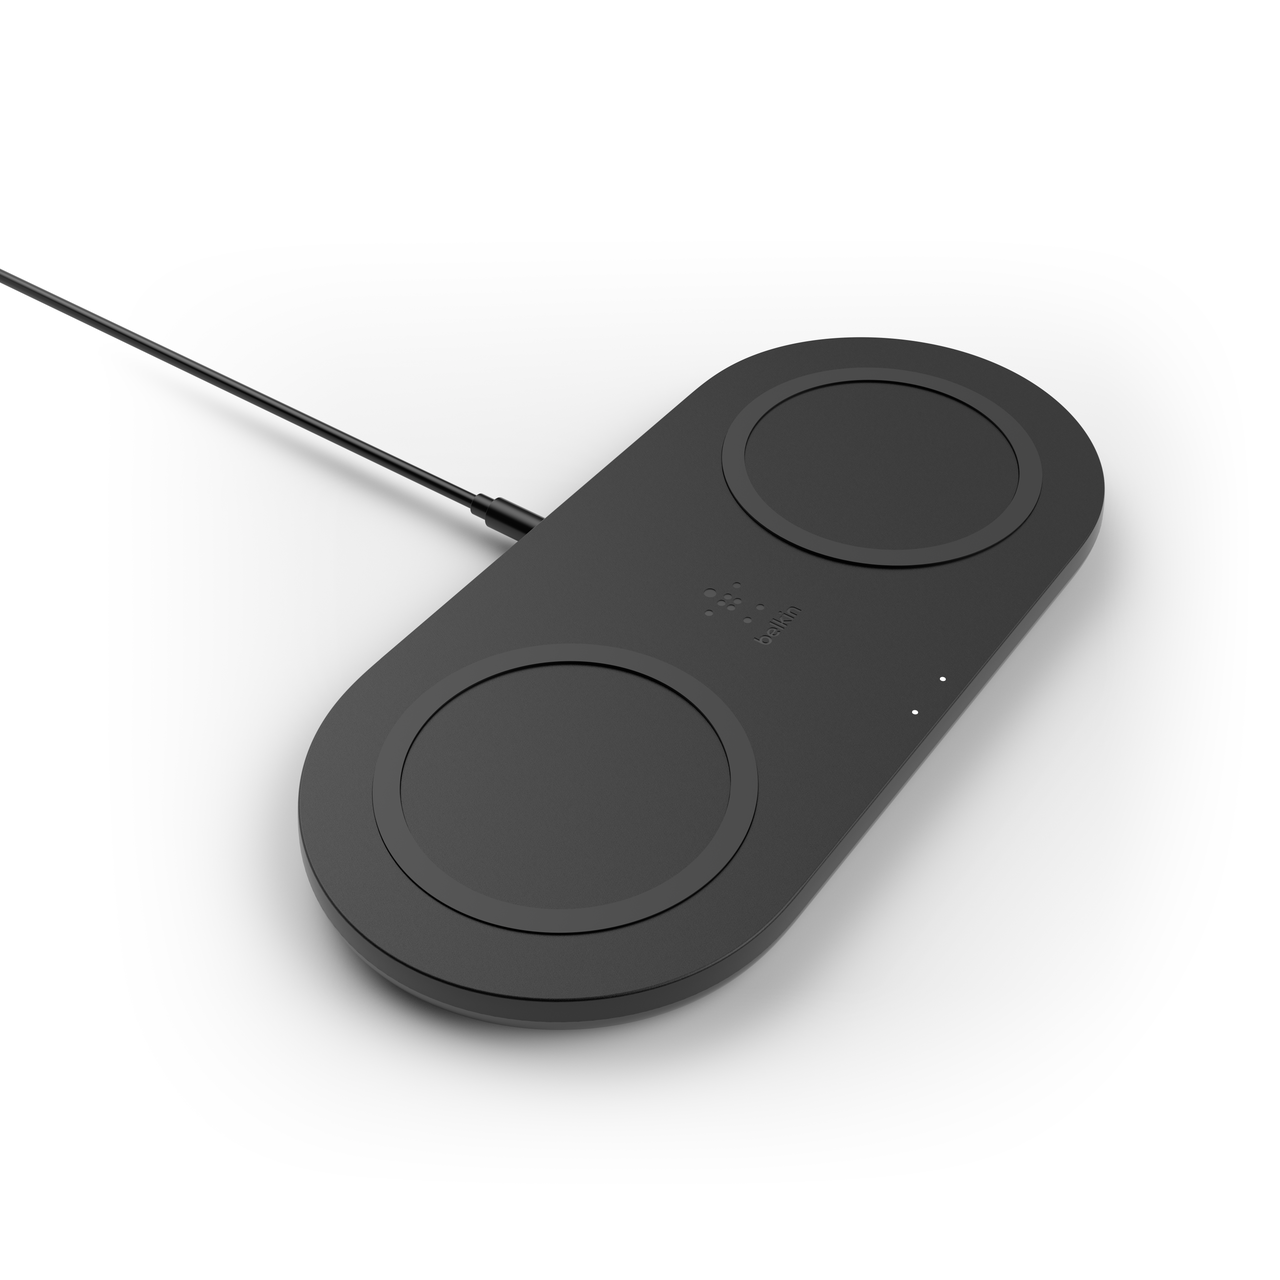 Geven Stratford on Avon Kan weerstaan Dual Wireless Charging Pads for iPhone & Android | Belkin | Belkin: US